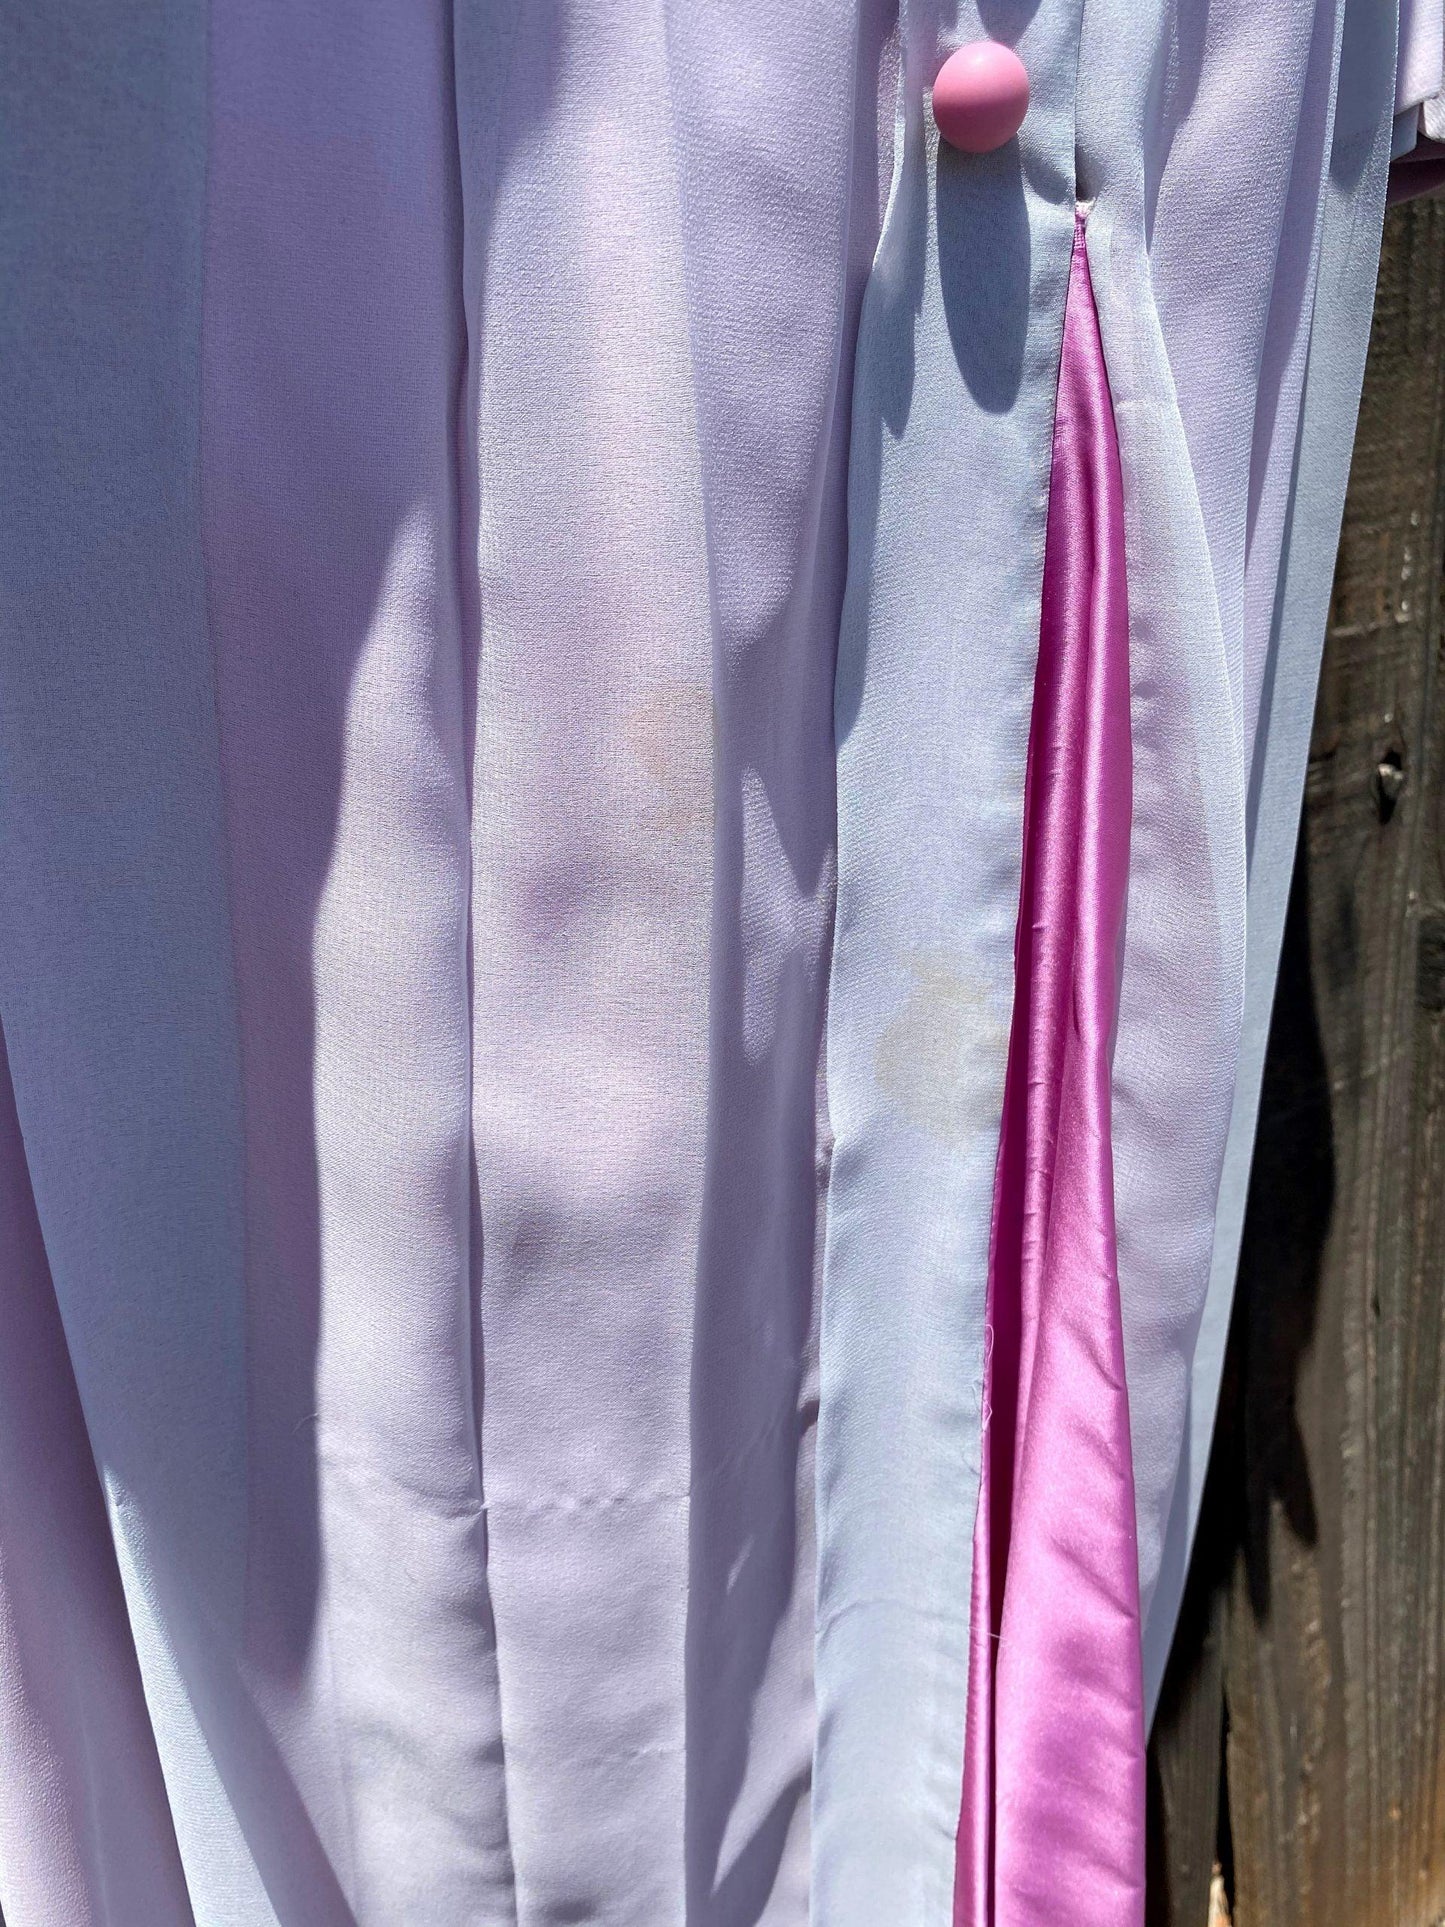 Edwardian Style Morning Day Dress With Pink Satin Details - A Walk Thru Time Vintage